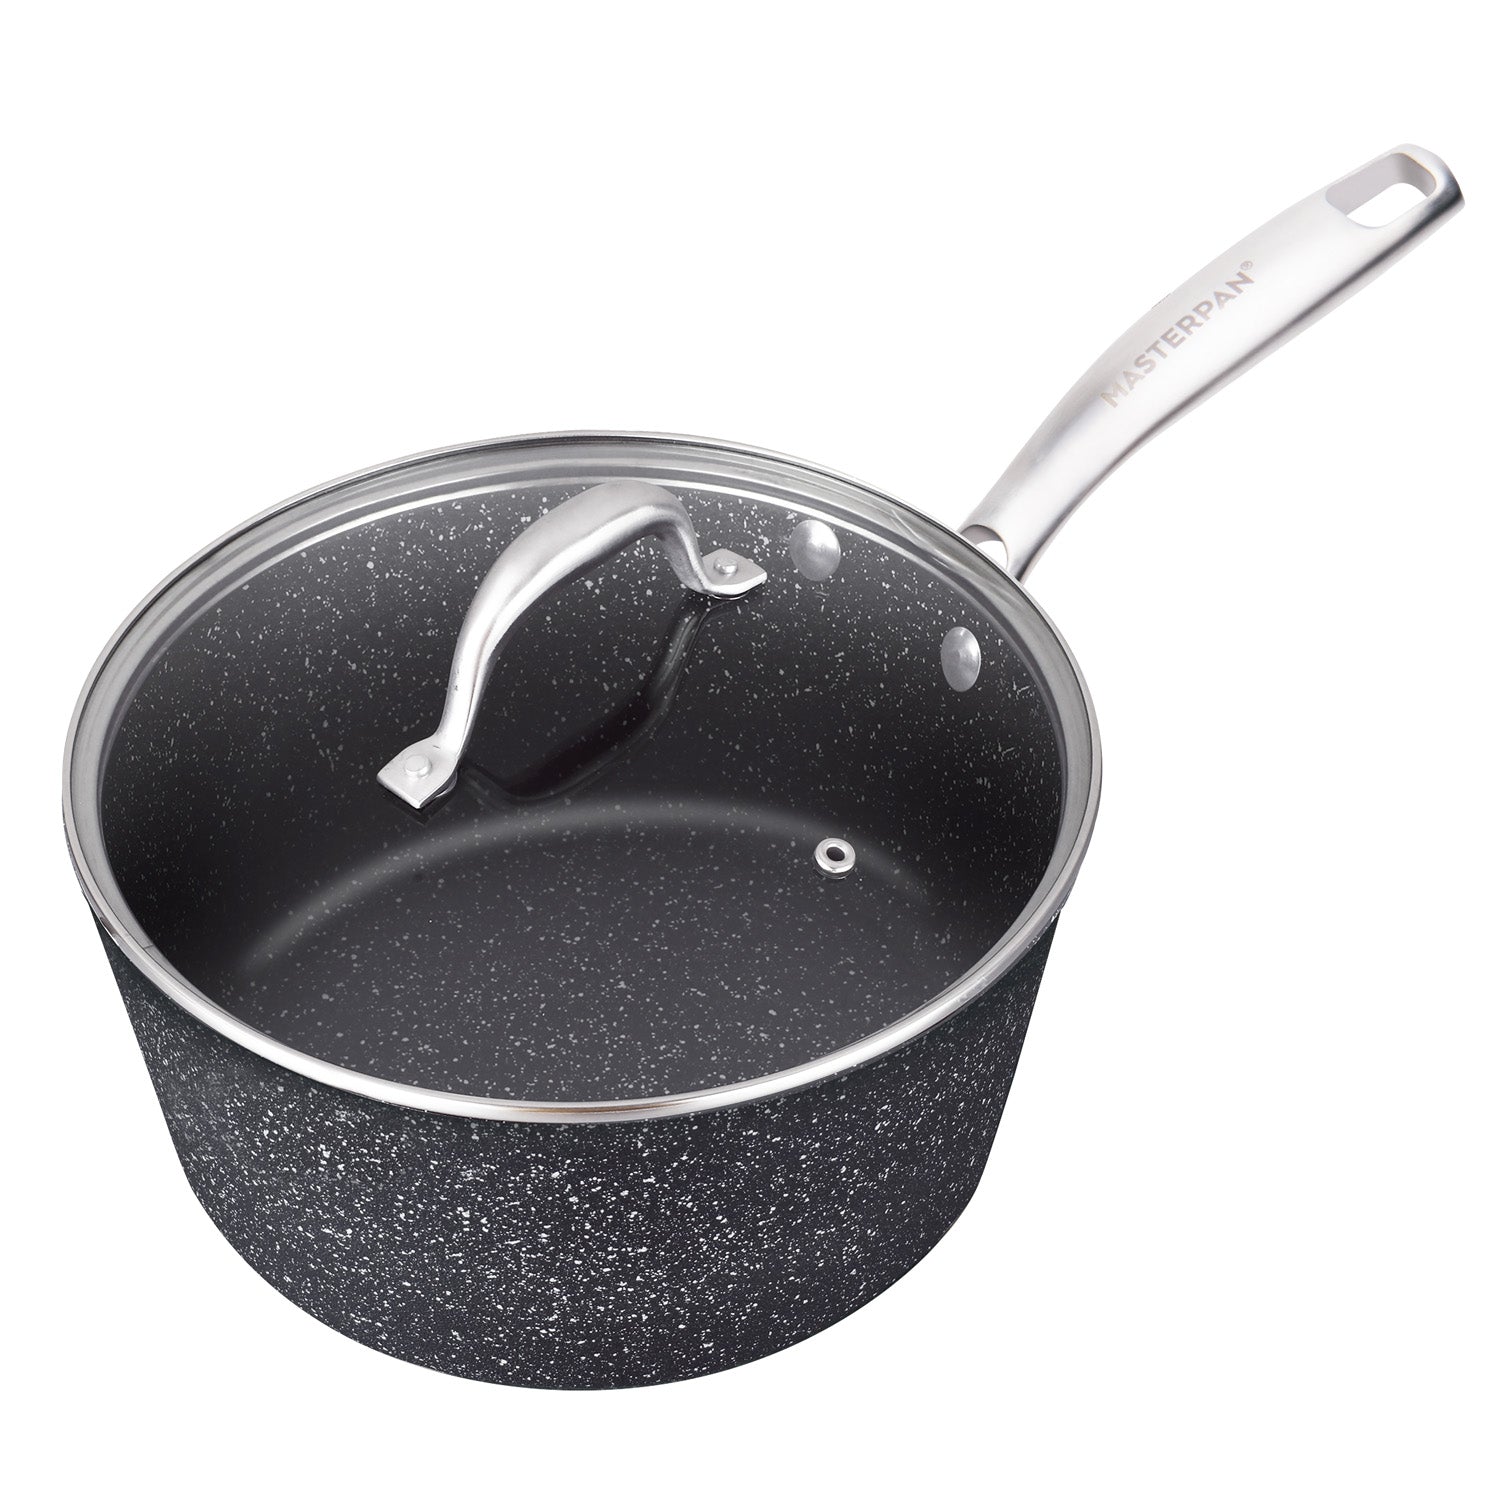 Crepe frying pan Induction with handle soft-touch and induction bottom  Биол — купить на сайте производителя